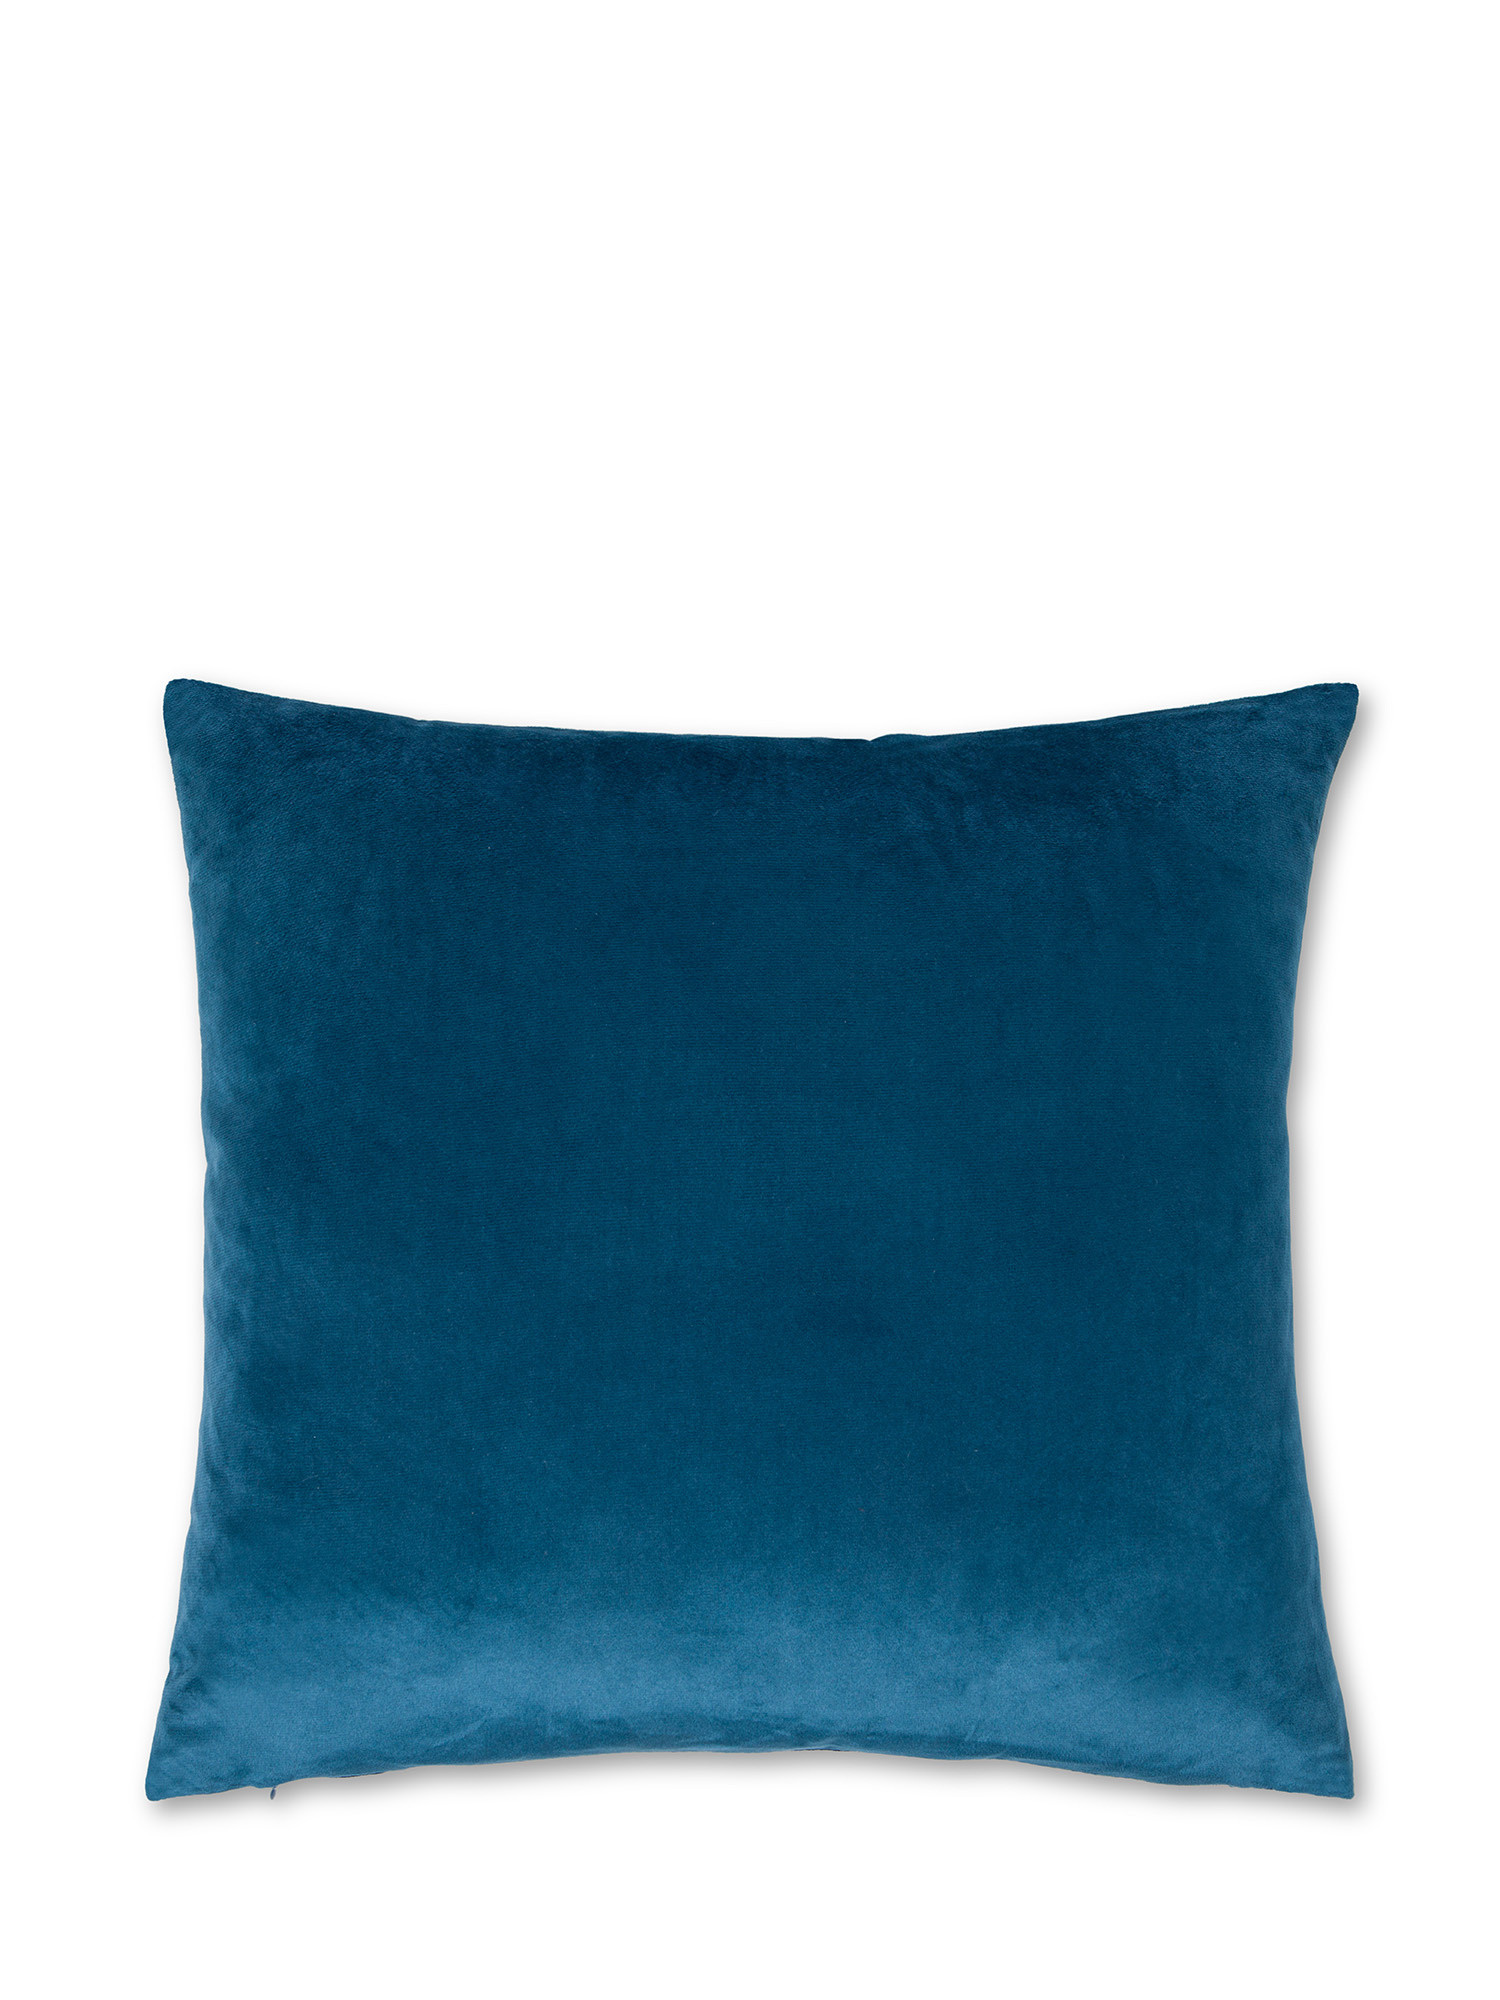 Solid color quilt velvet cushion 45X45cm, Blue, large image number 1